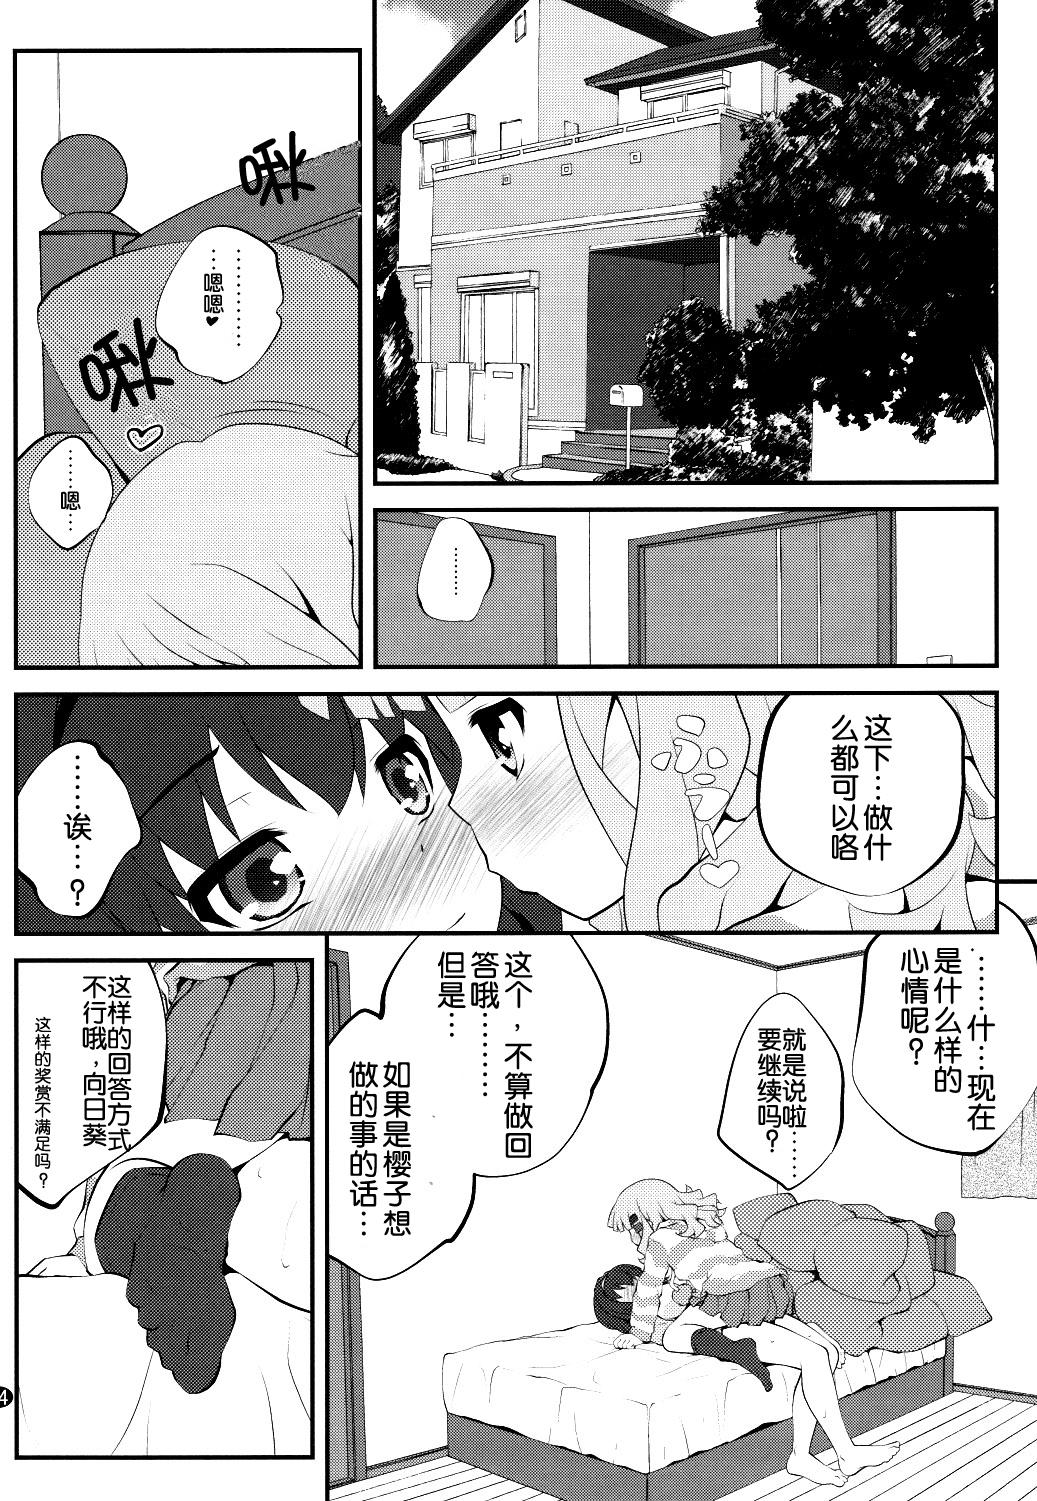 Girl Himegoto Flowers 7 - Yuruyuri Suckingdick - Page 4